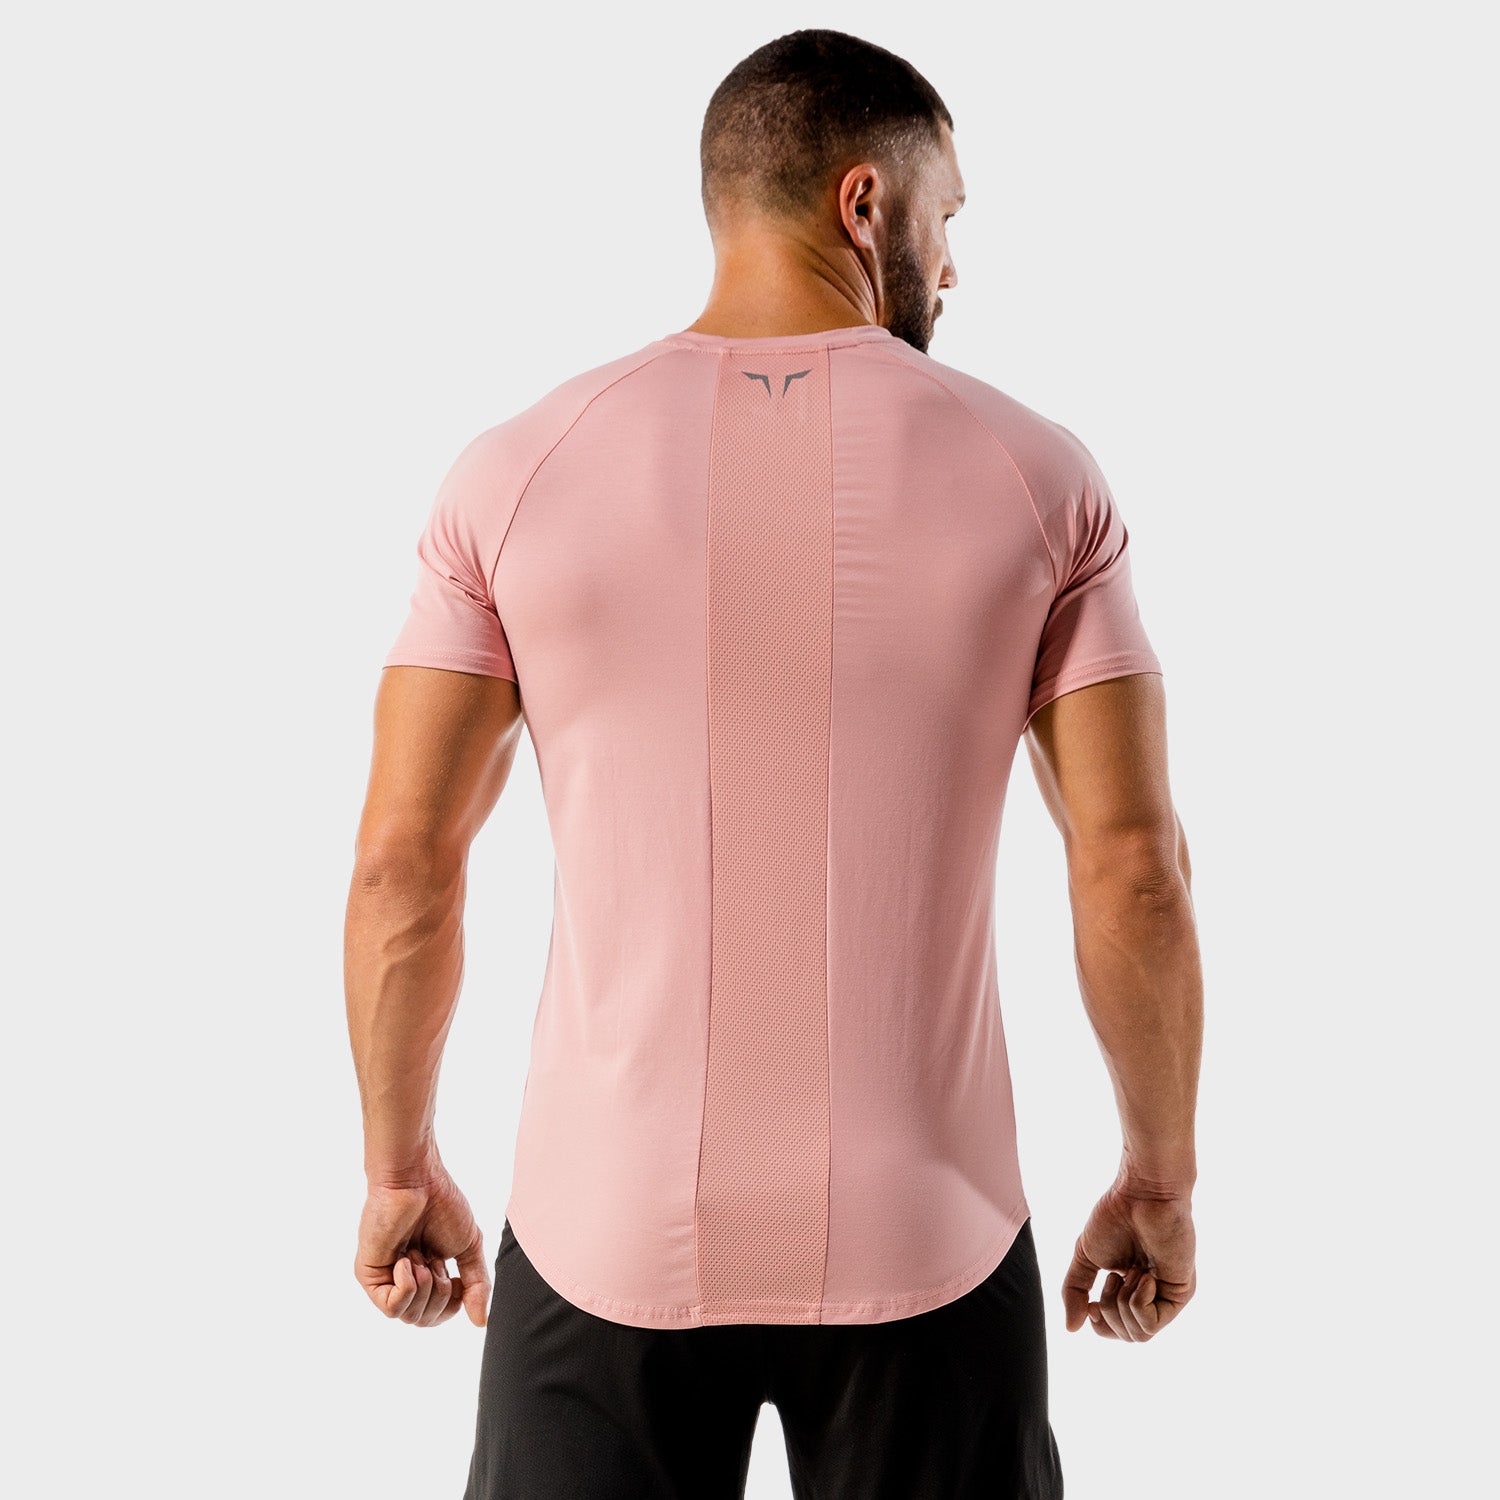 squatwolf-gym-wear-statement-tee-pink-workout-shirts-for-men